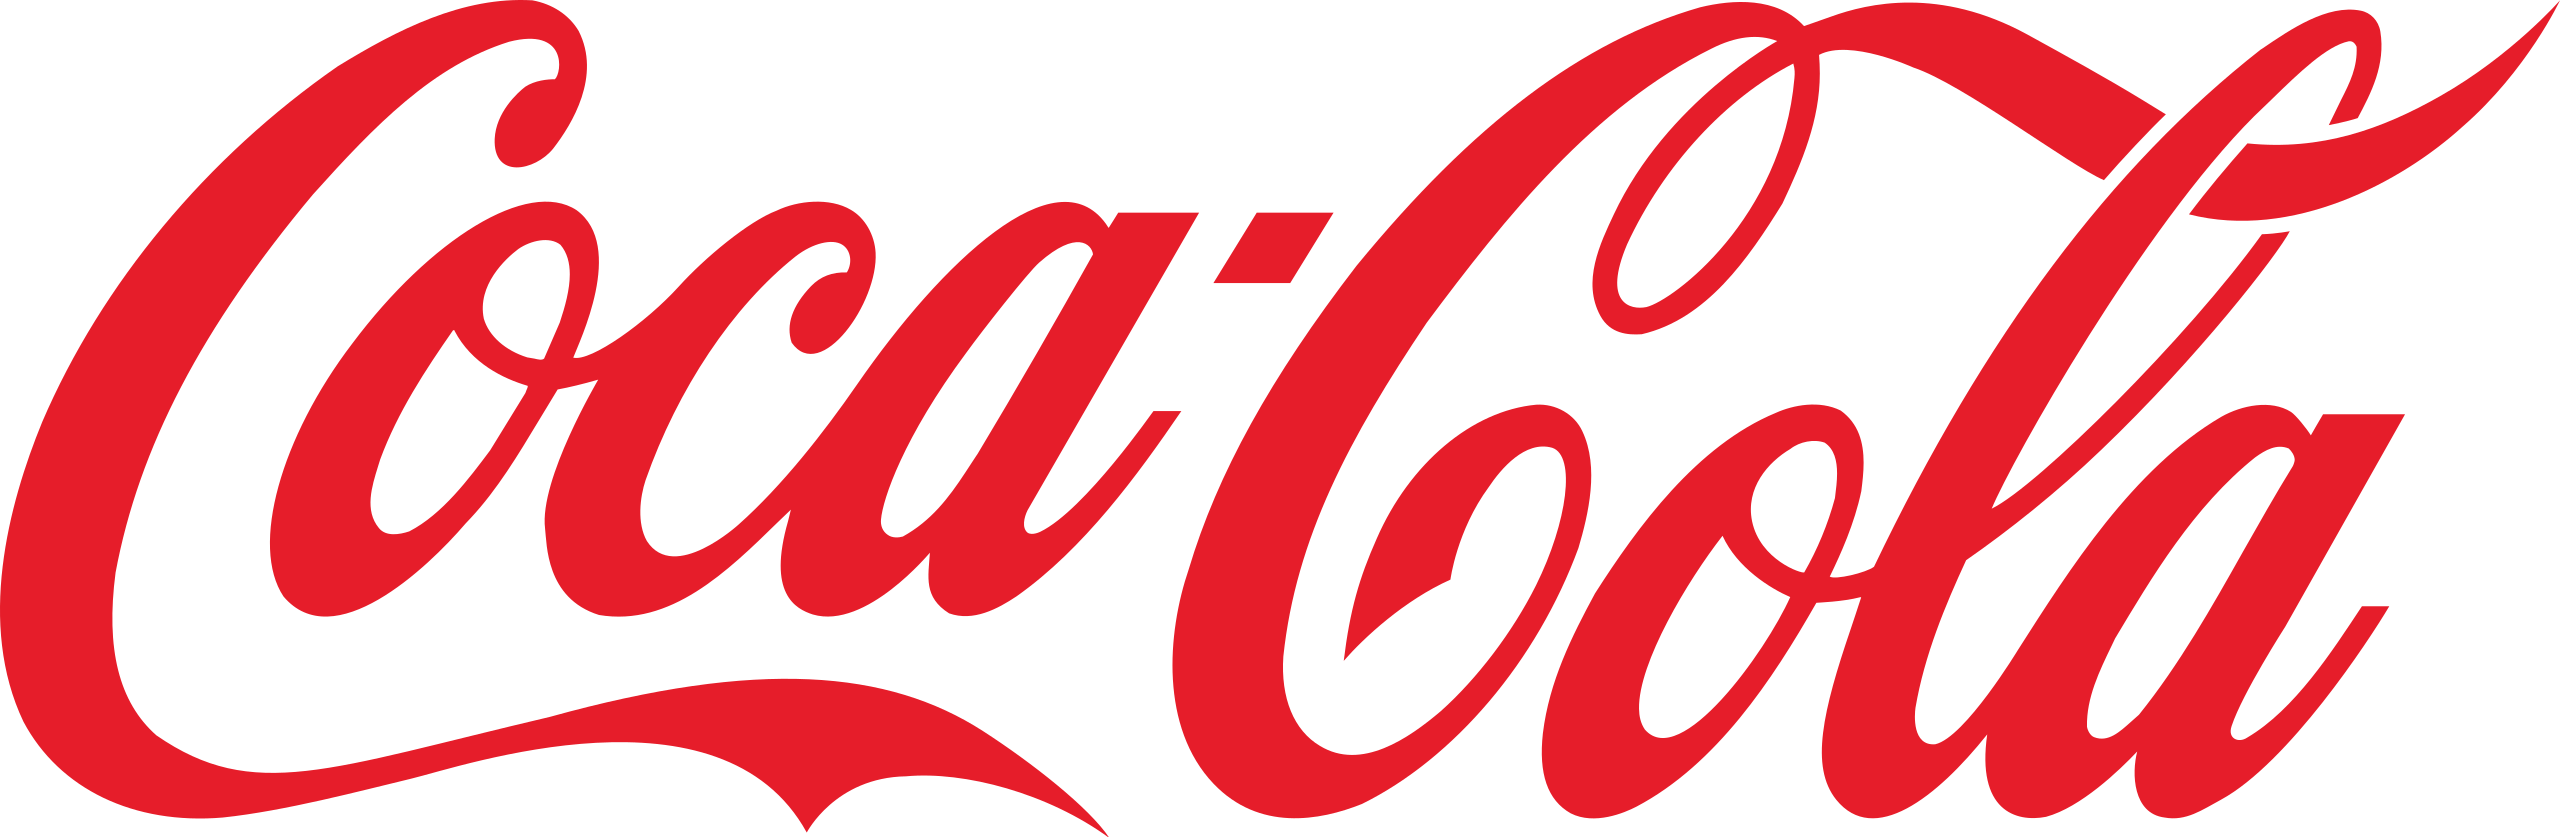 Coca-Cola Logo in red script